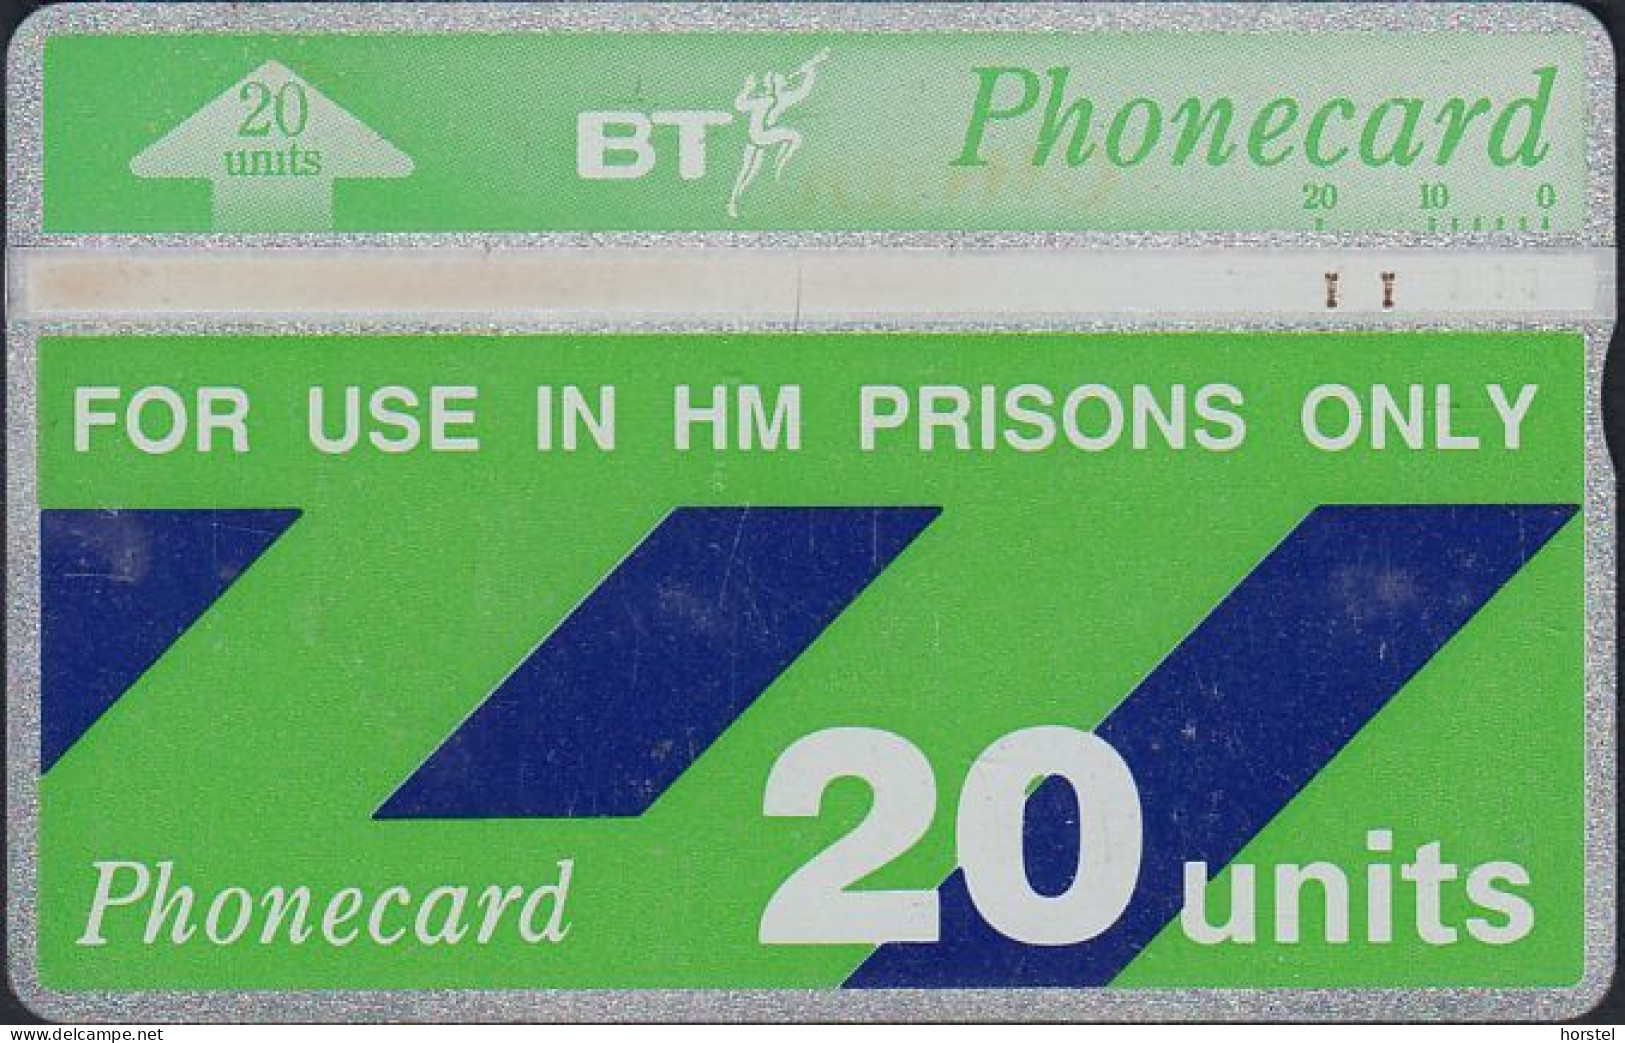 UK - British Telecom L&G H.M. Prison Card CUP005  (212F)  20 Units - [ 3] Prisiones